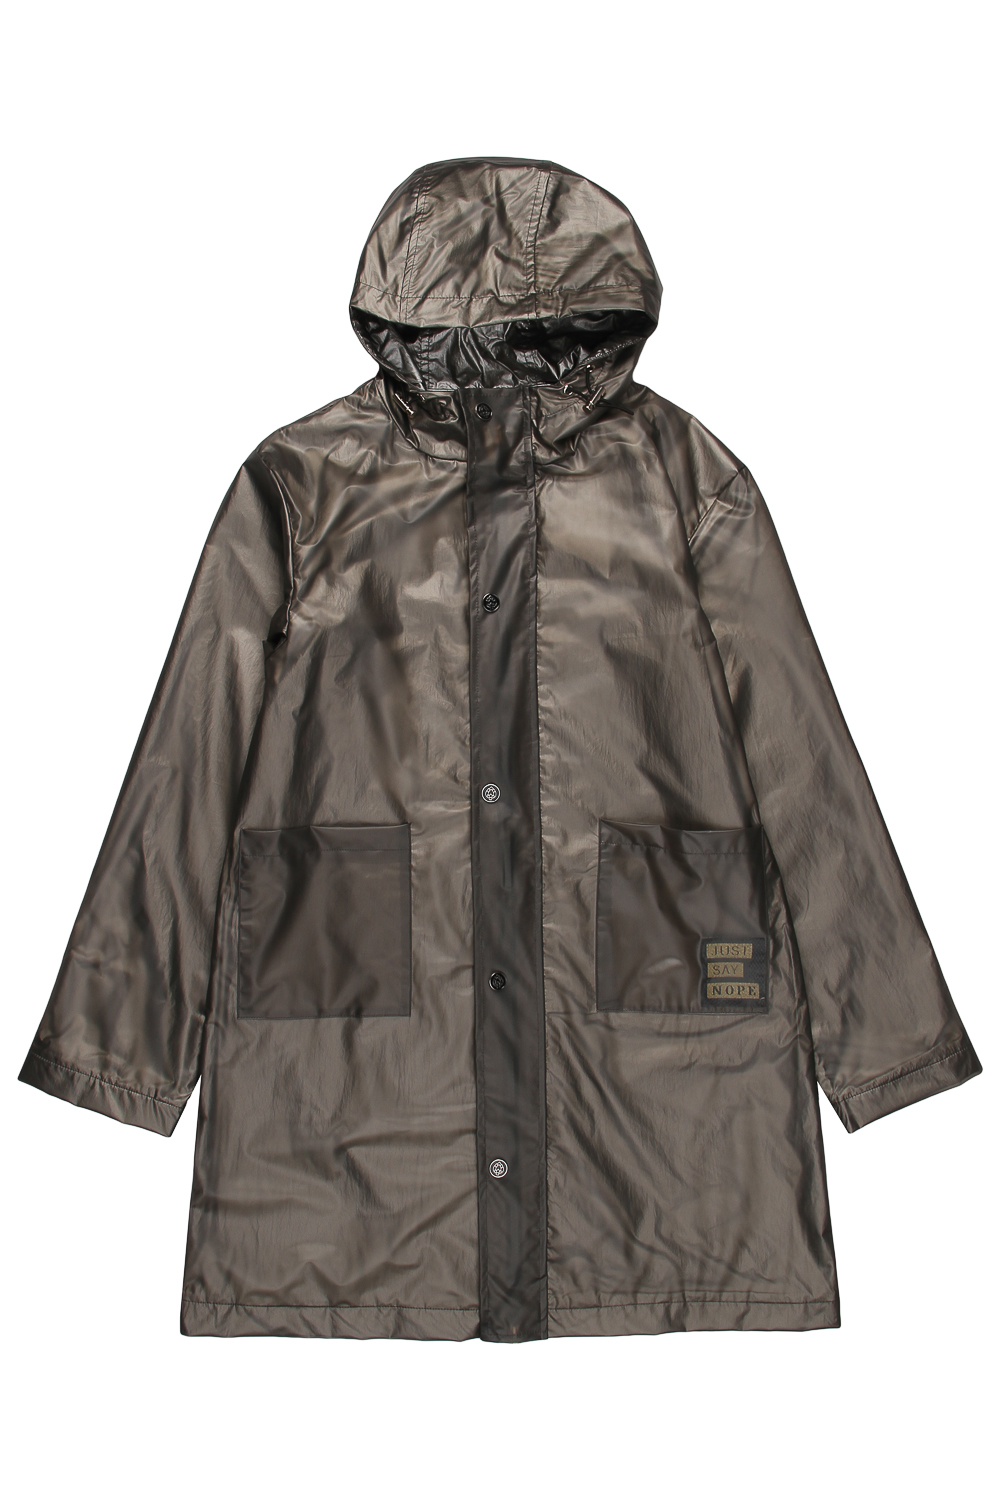 Куртка Laddobbo, размер 140, цвет коричневый ADJG-04SS - фото 4